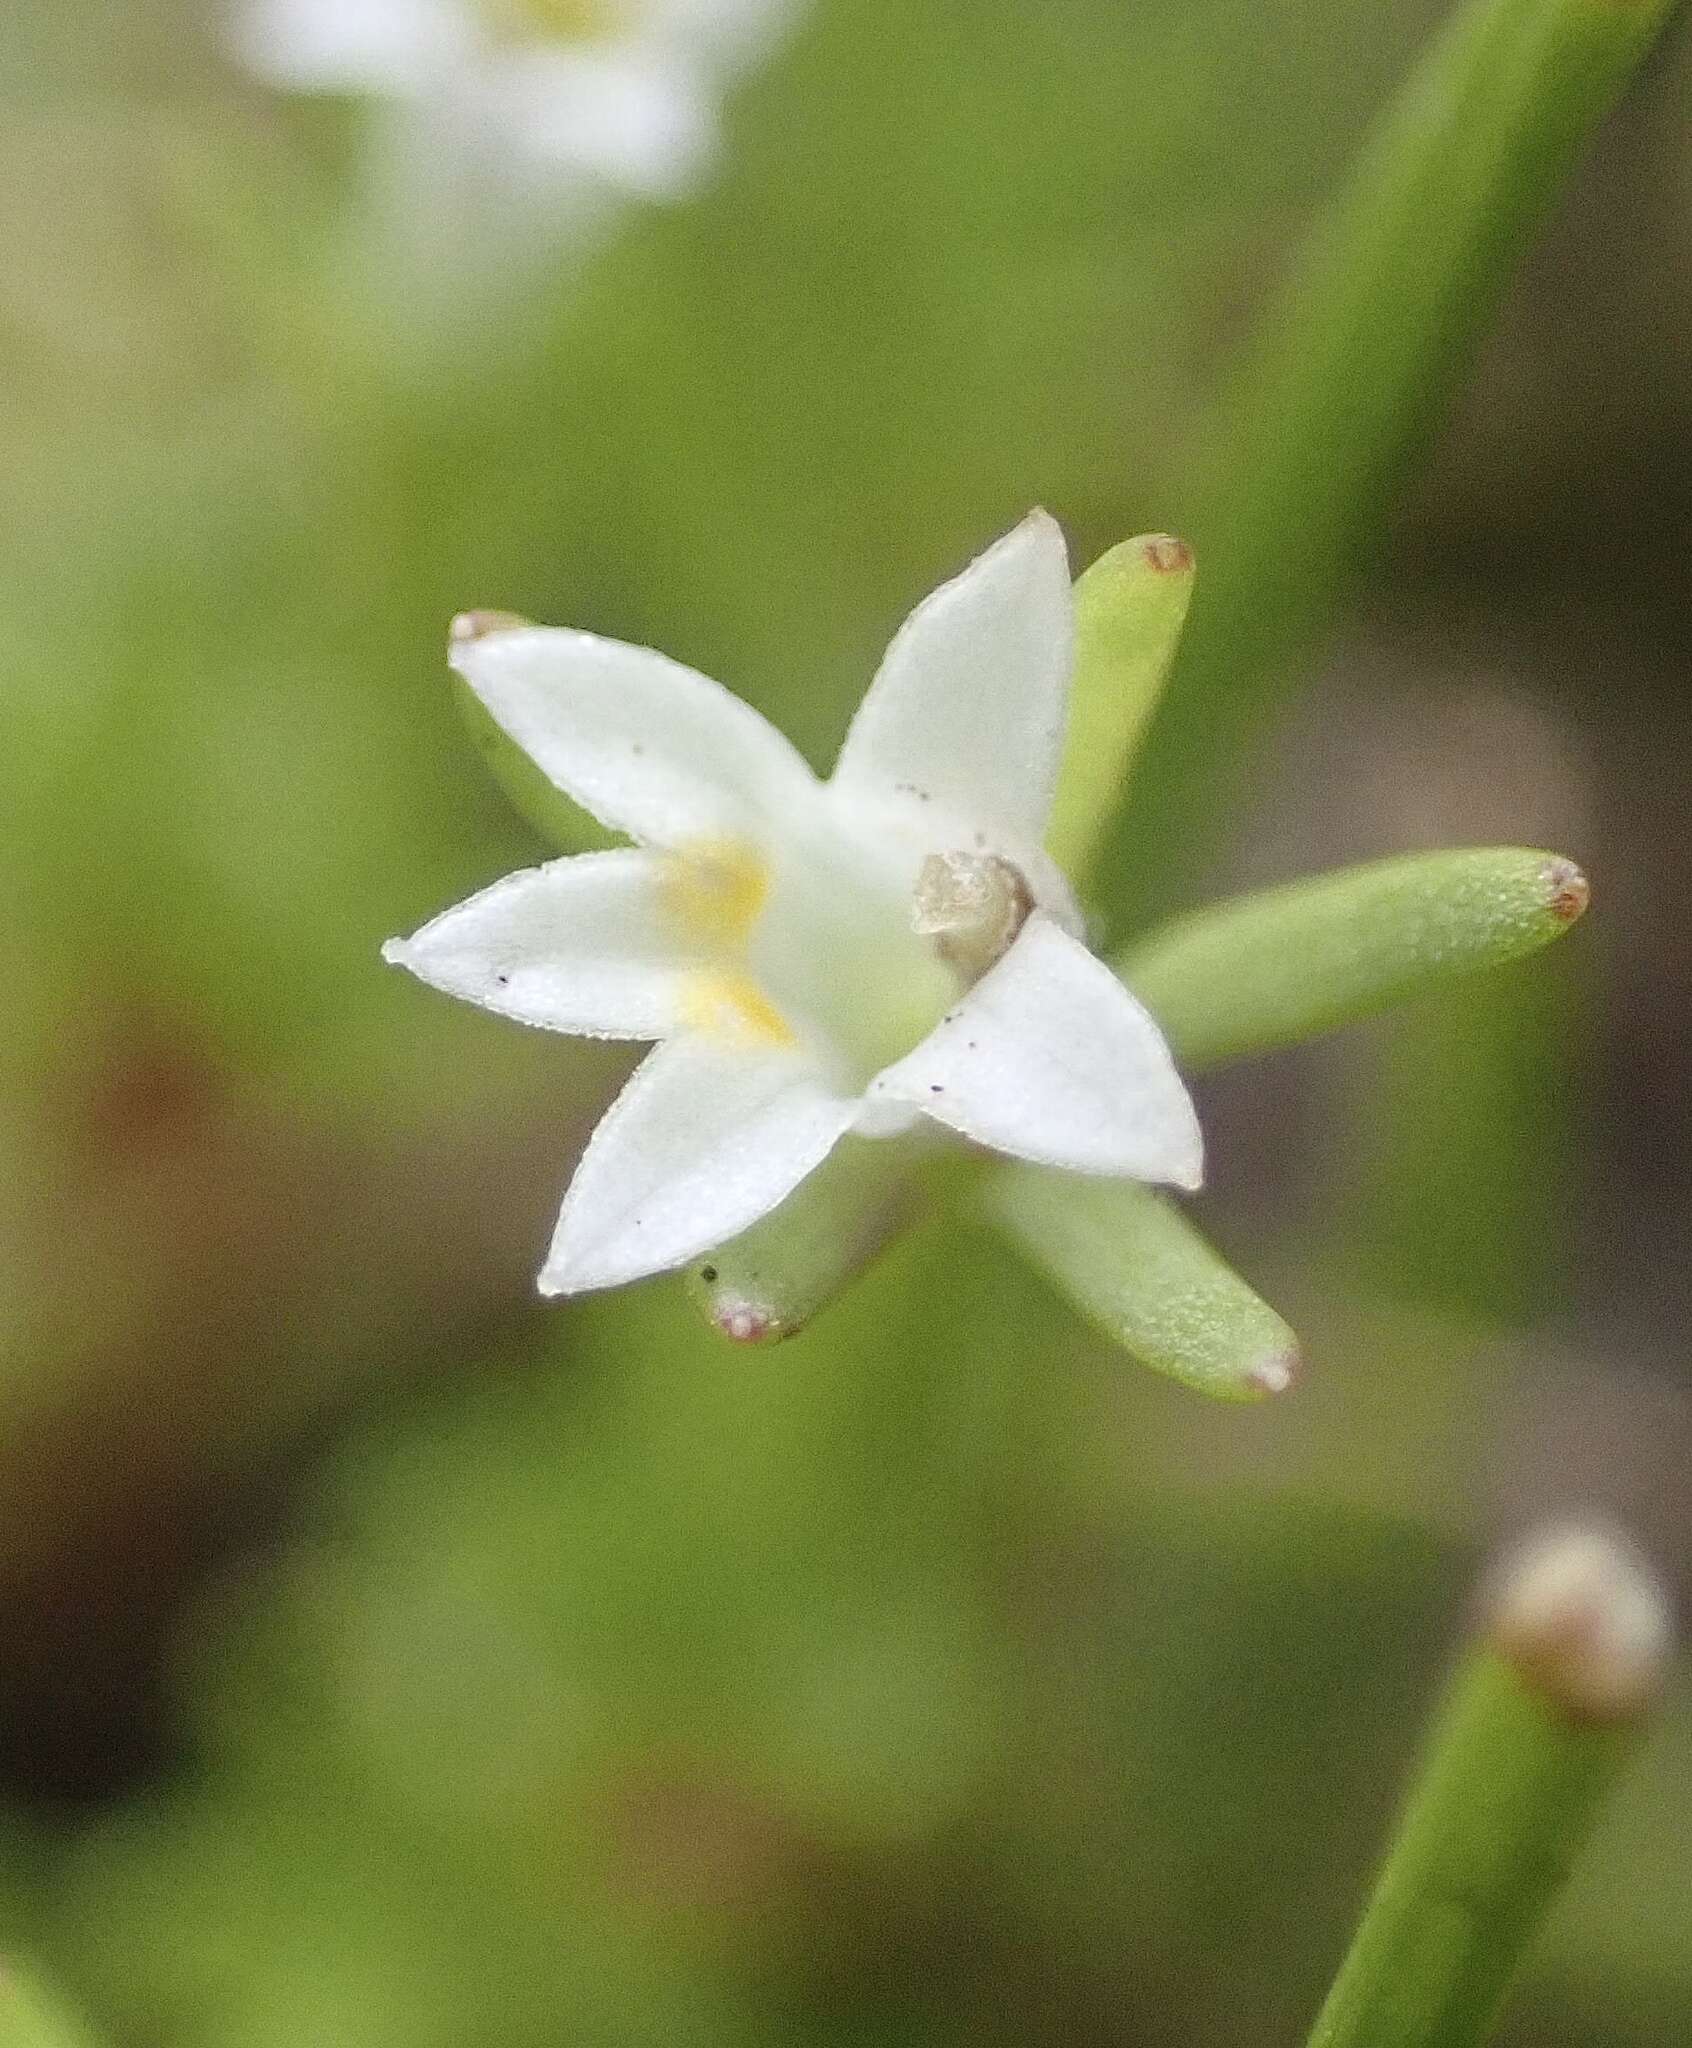 Image of Dwarf Calico-Flower